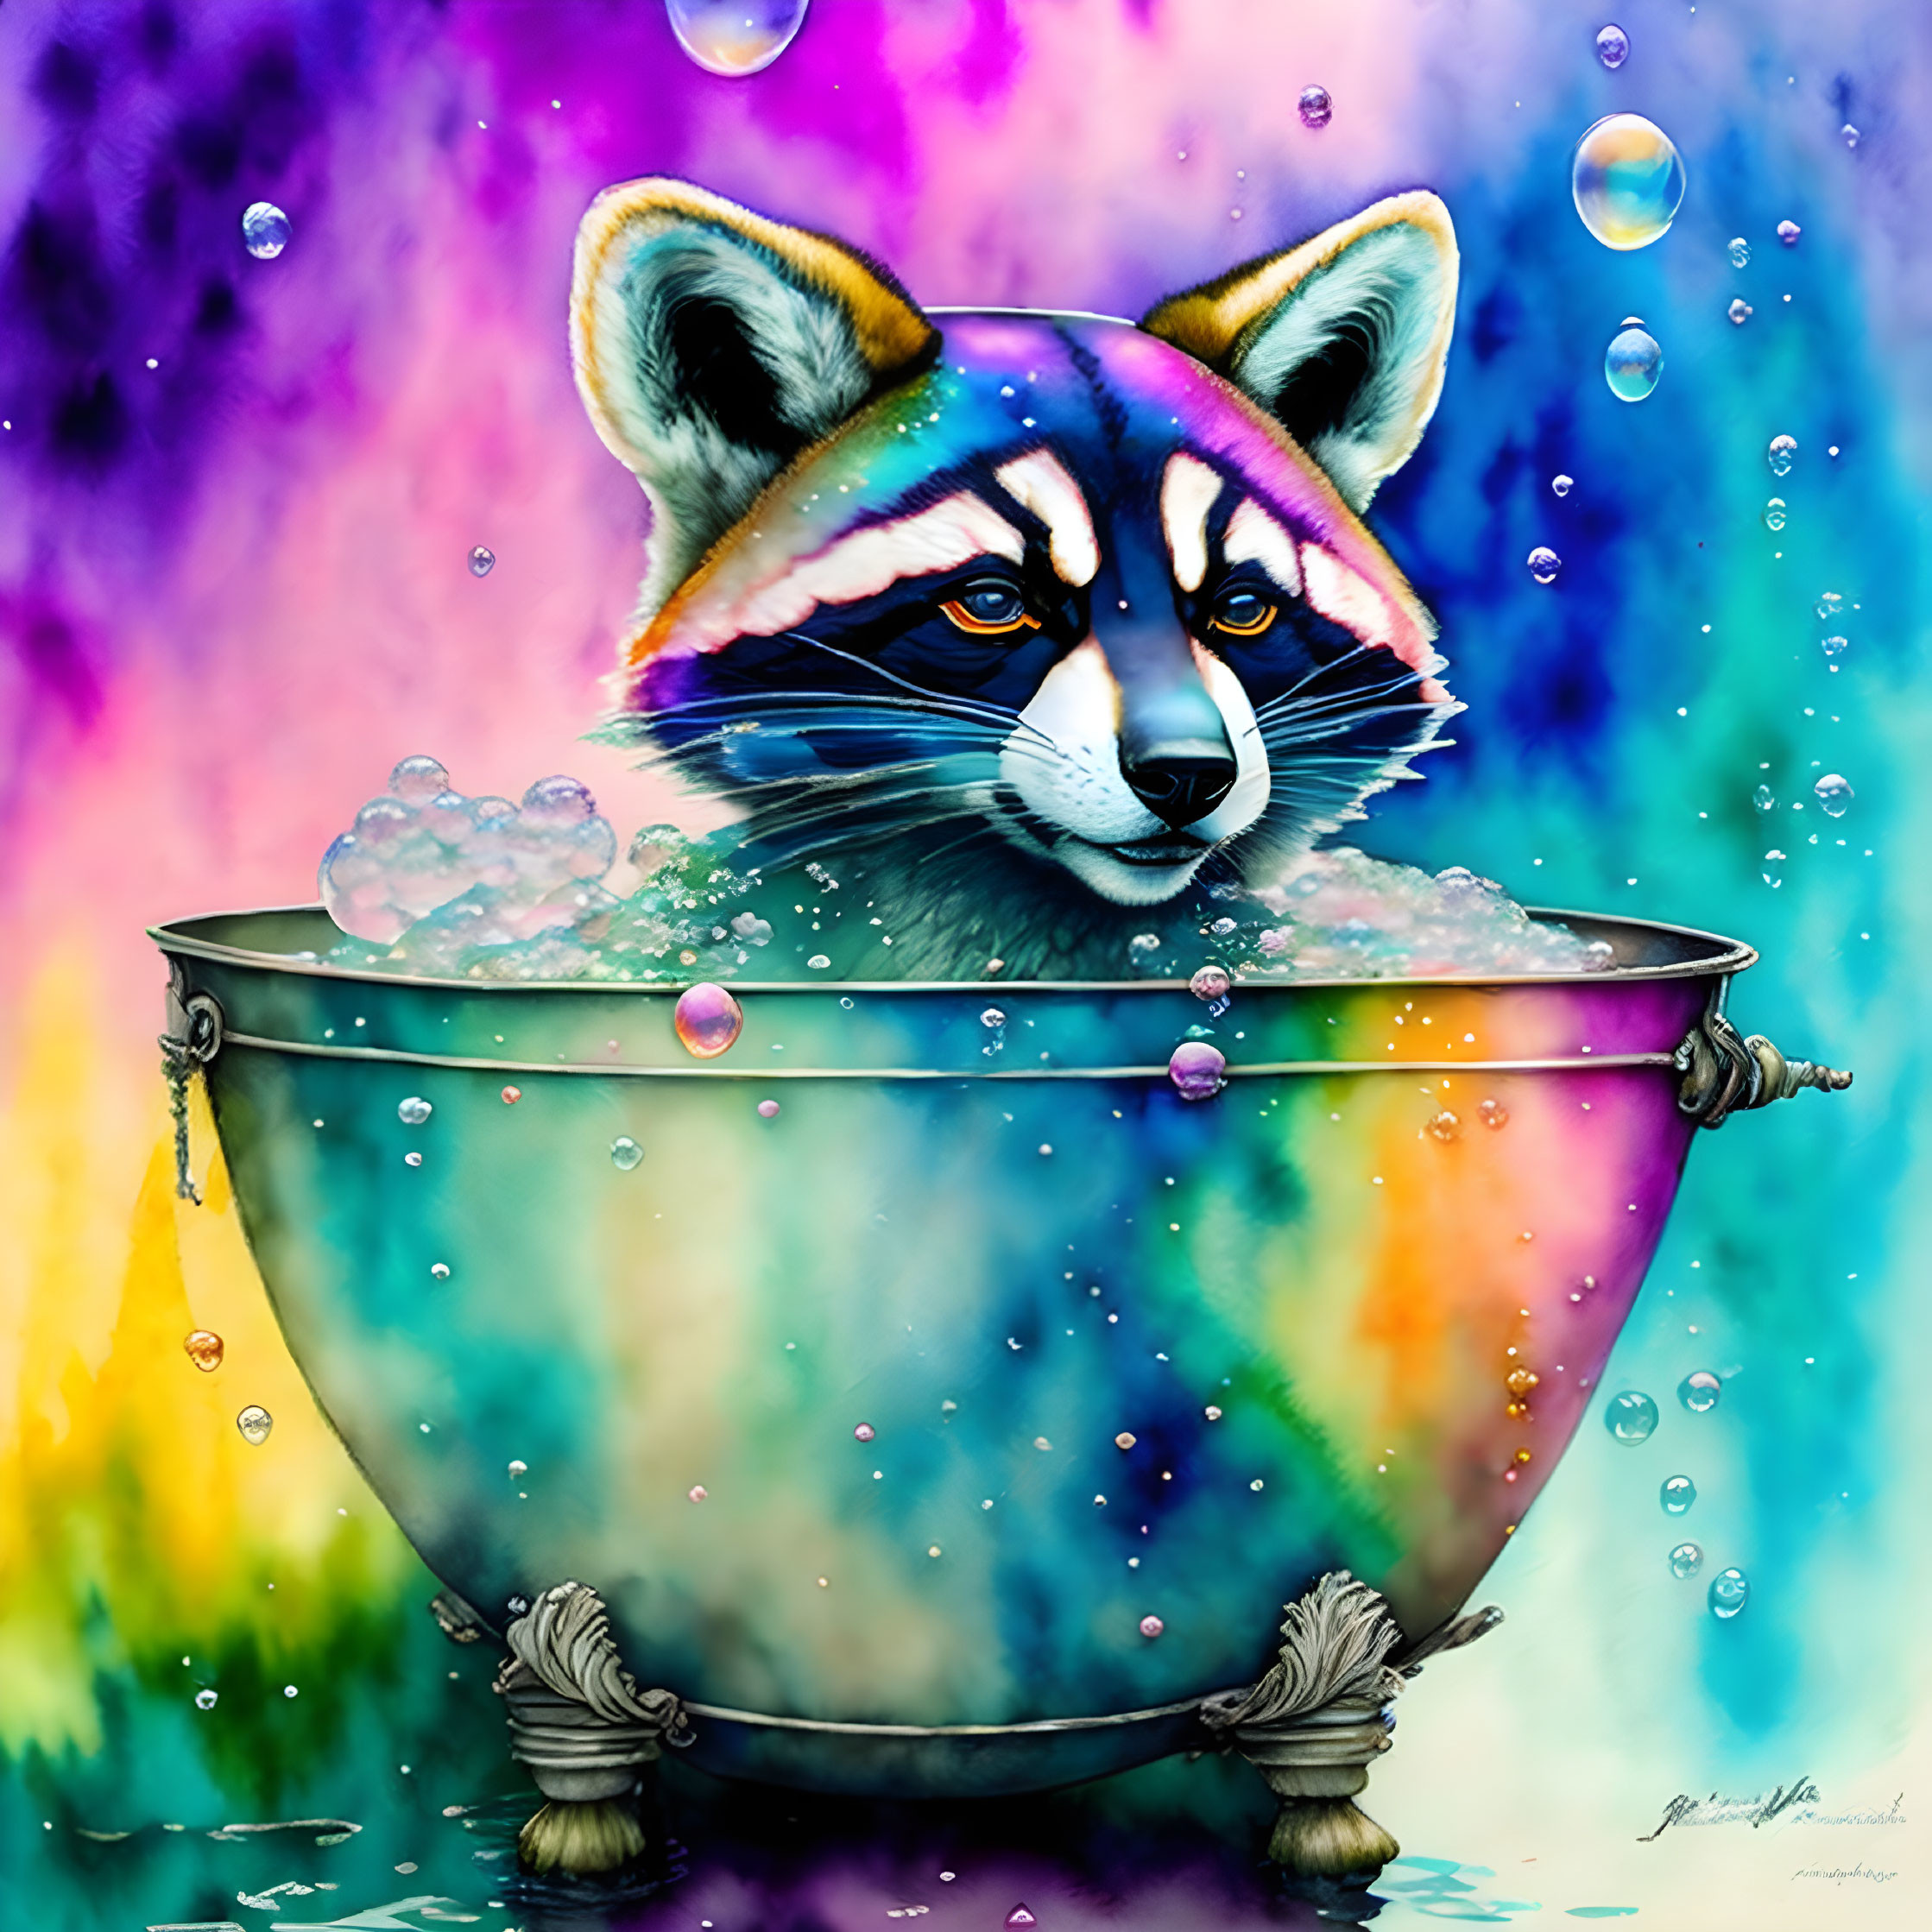 Vibrant raccoon face in bubble bath against colorful backdrop